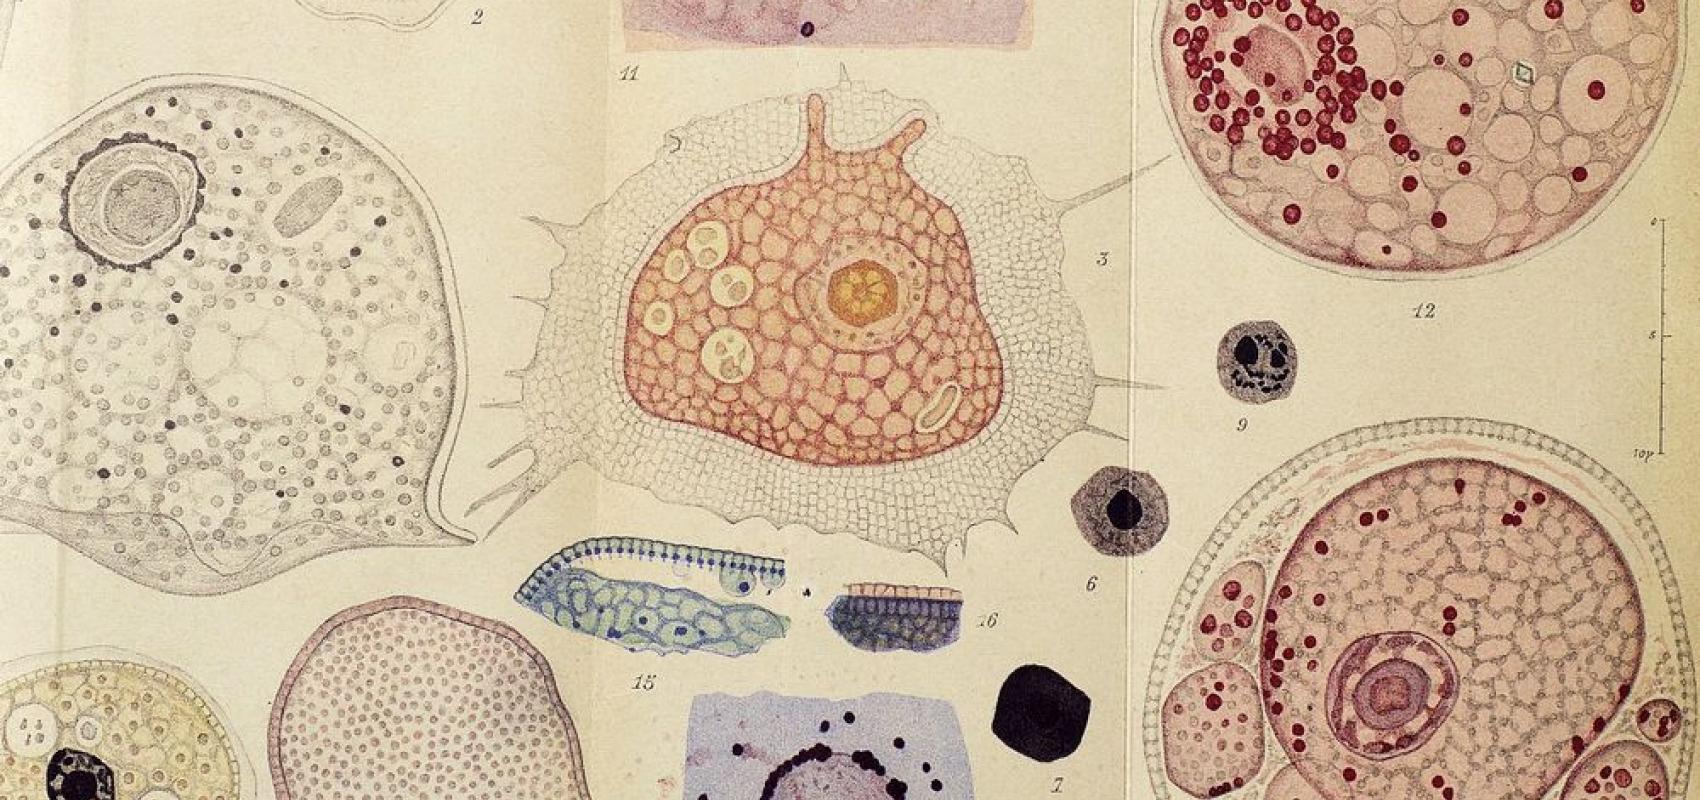 Archives d'anatomie microscopique – 1905 -  - BnF